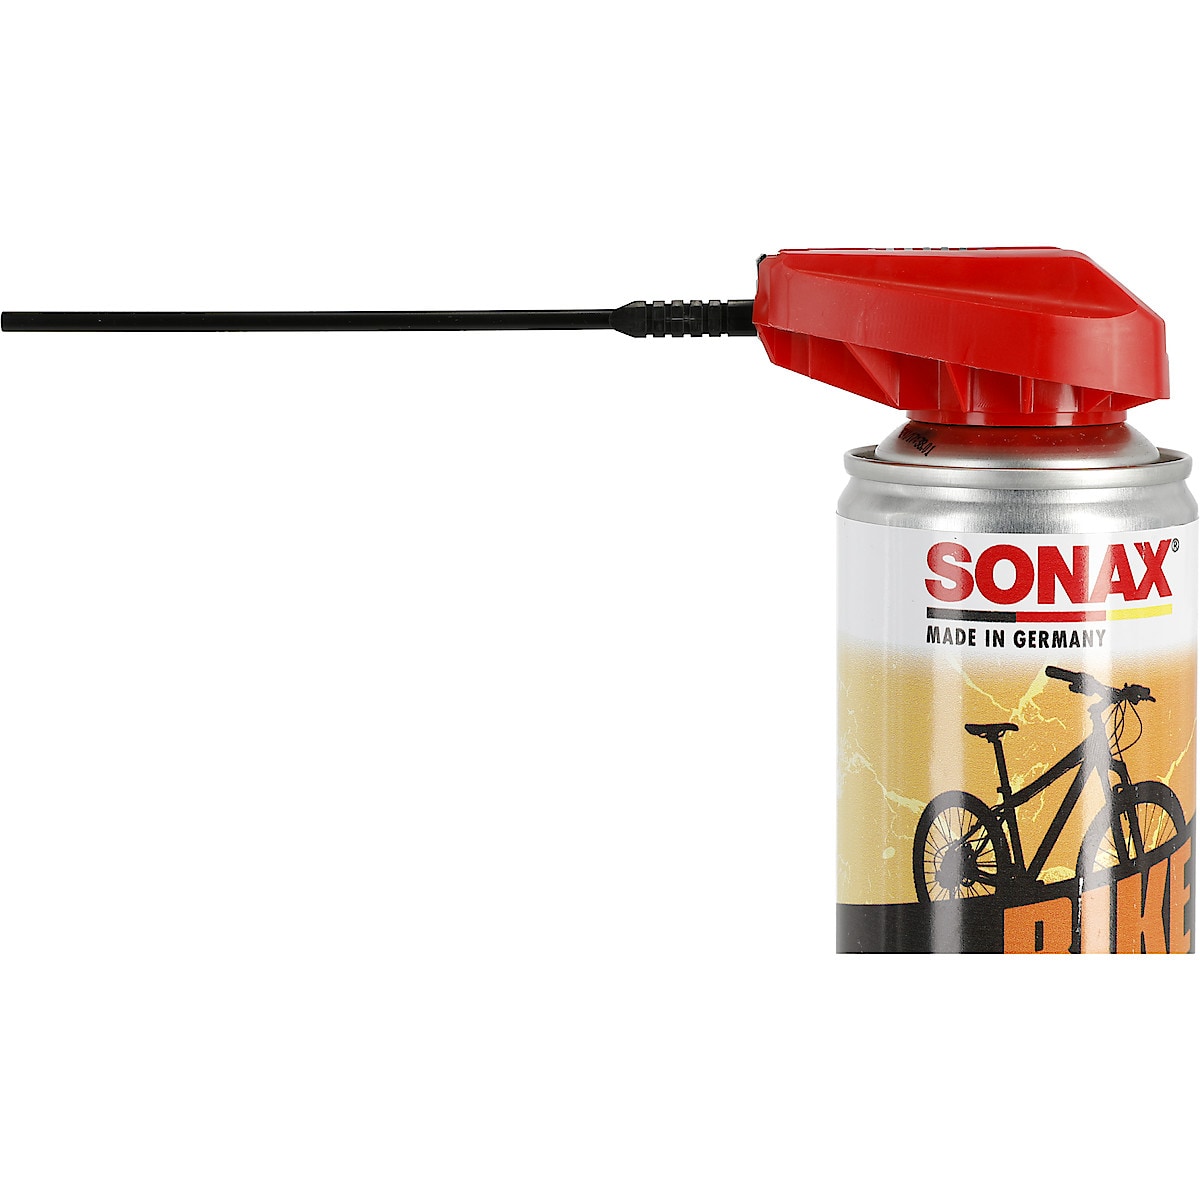 Sonax kedjespray 300 ml